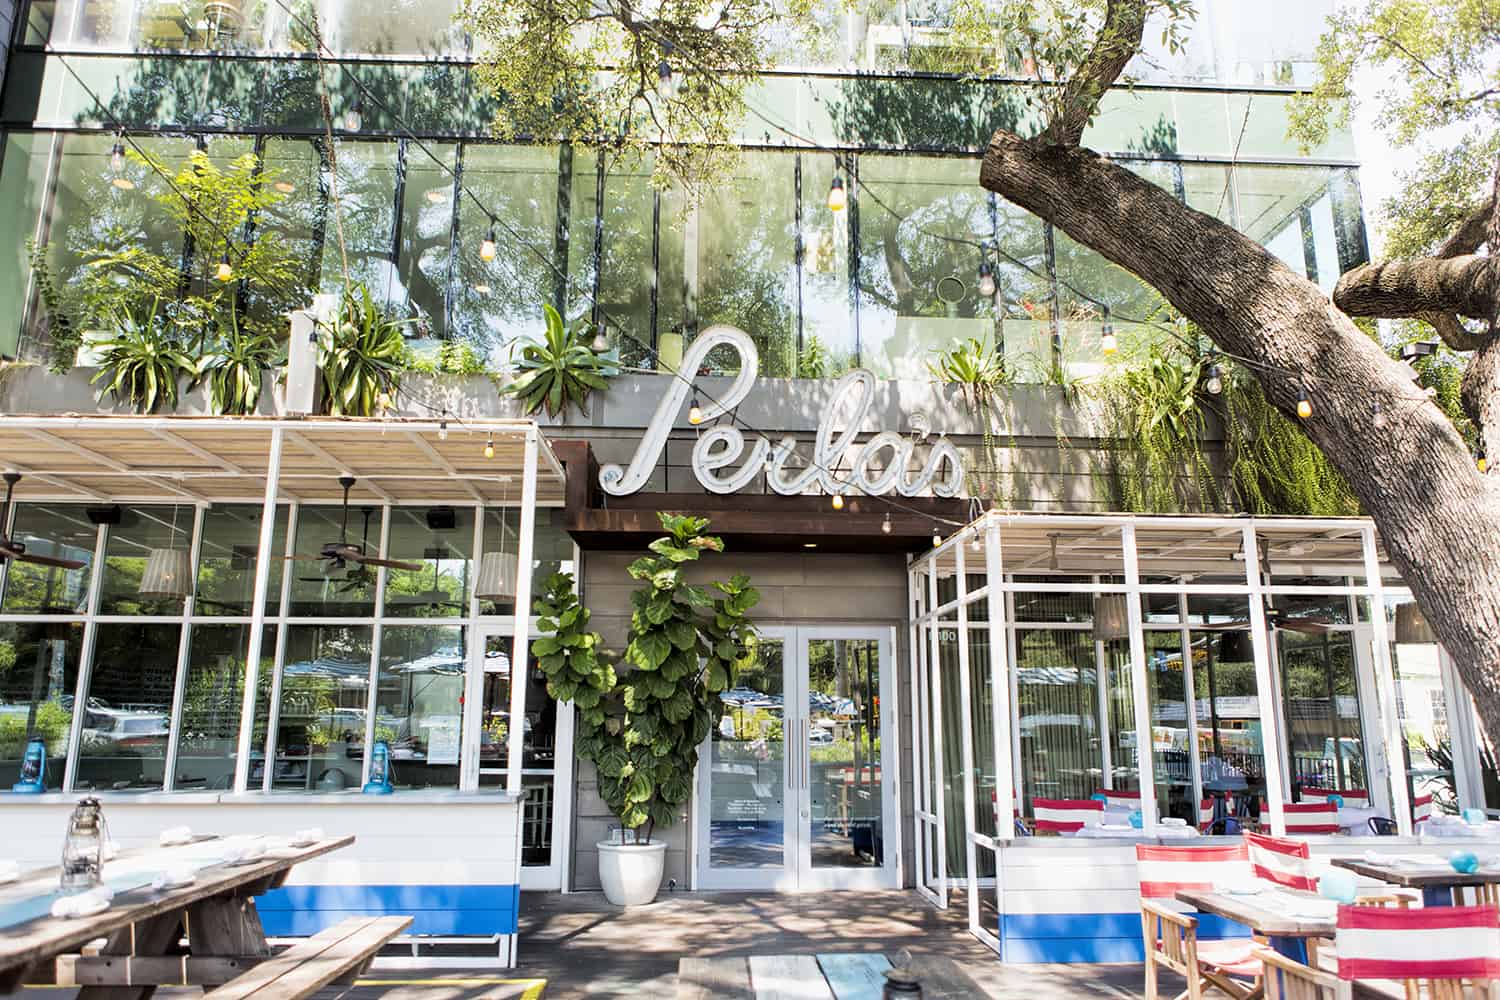 Perla's Restaurant Austin